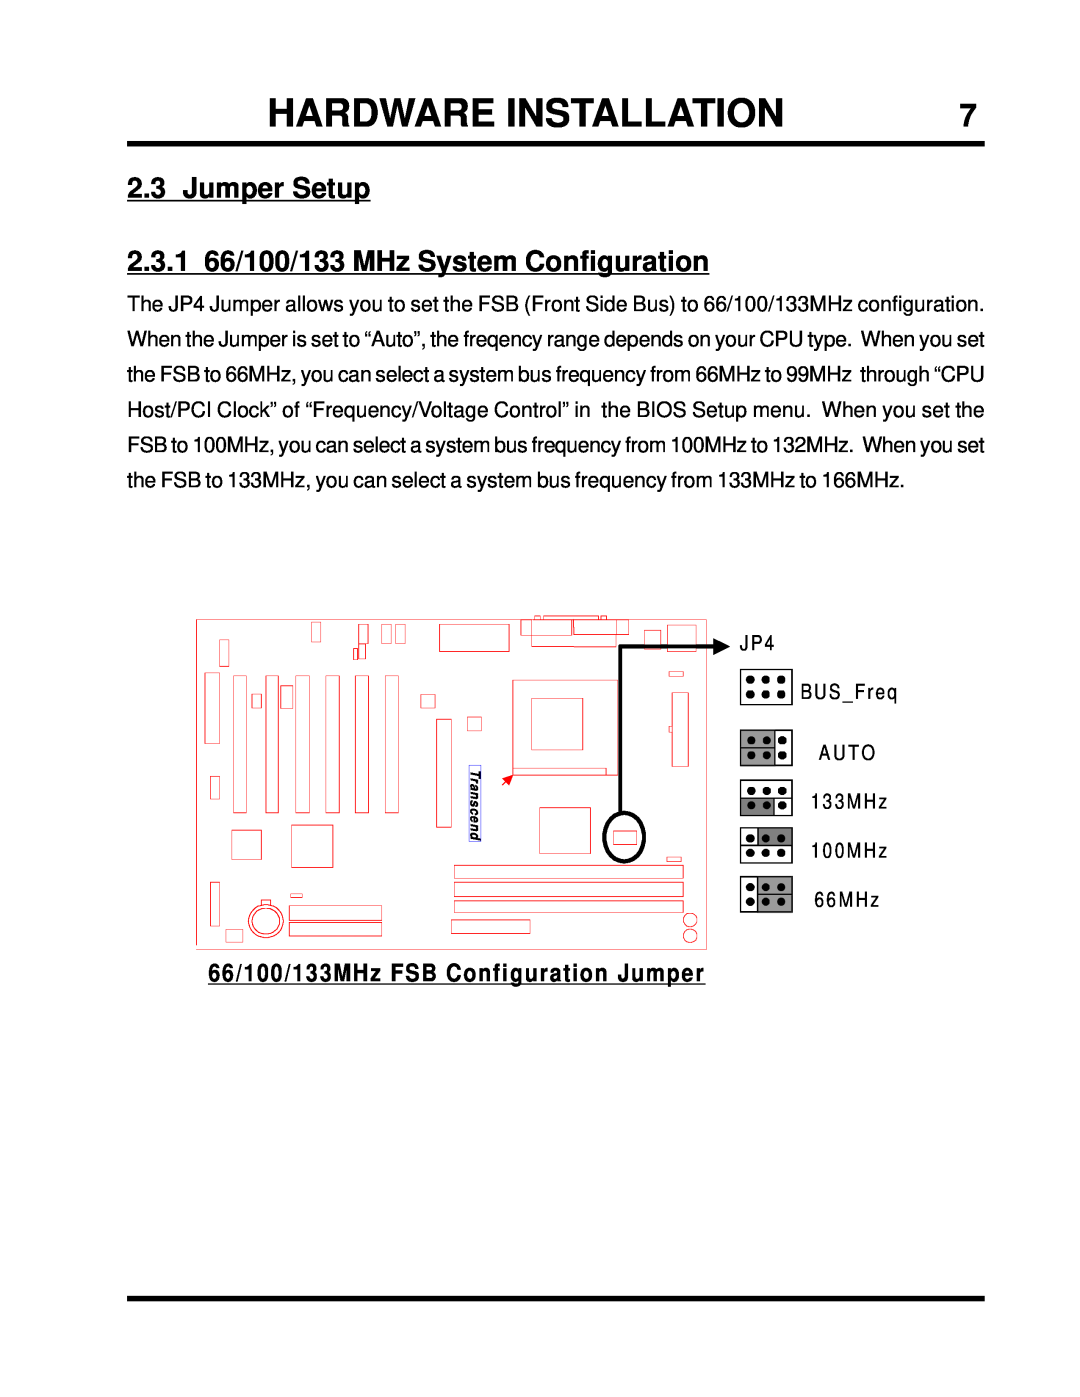 Intel TS-ASP3 user manual Jumper Setup, 2.3.1 66/100/133 MHz System Configuration, 66/100/133MHz FSB Configuration Jumper 